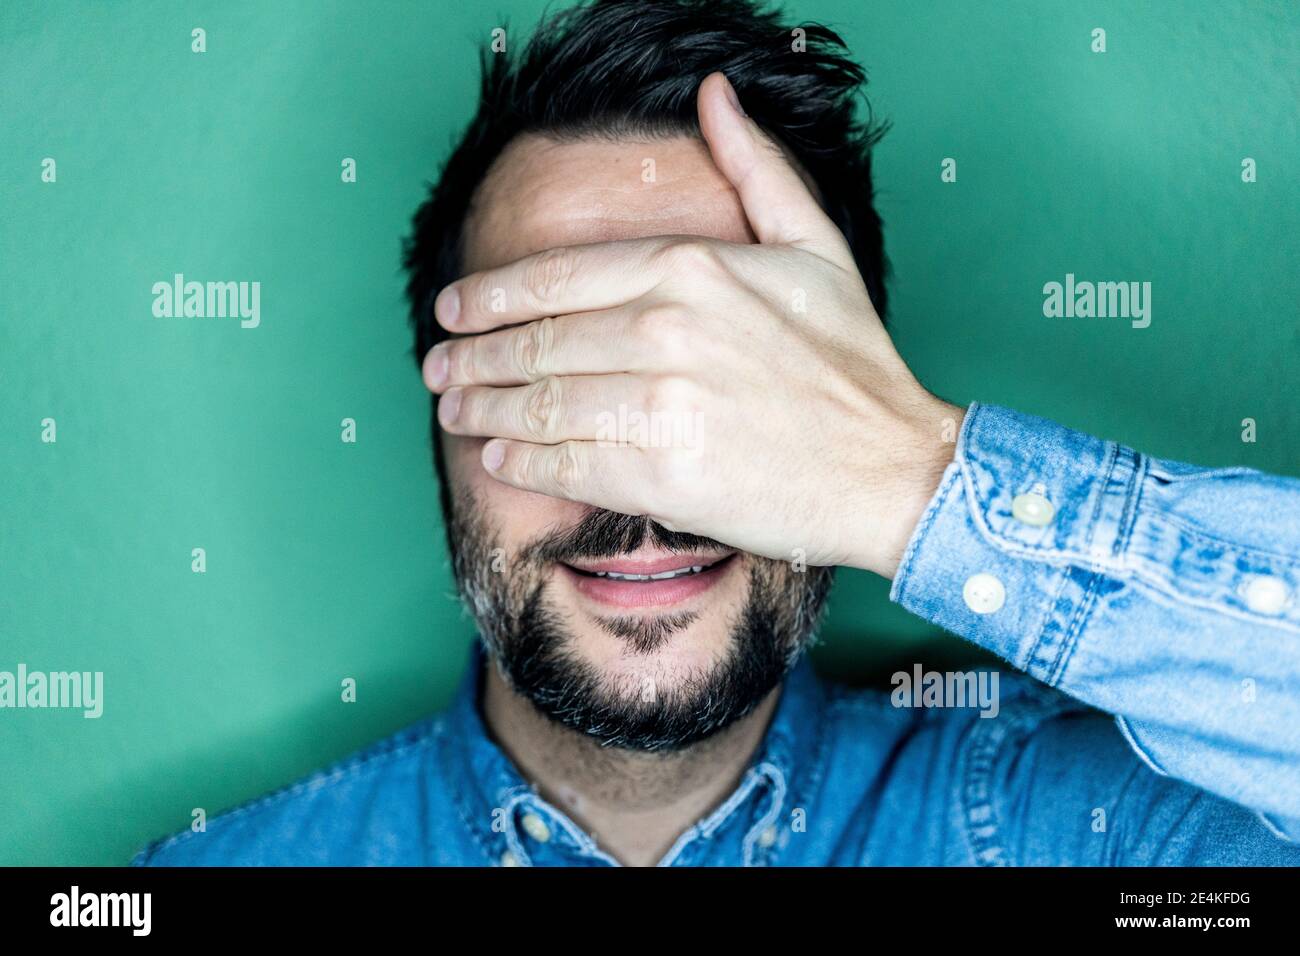 Studio portrait of smiling man covering eyes Stock Photo - Alamy